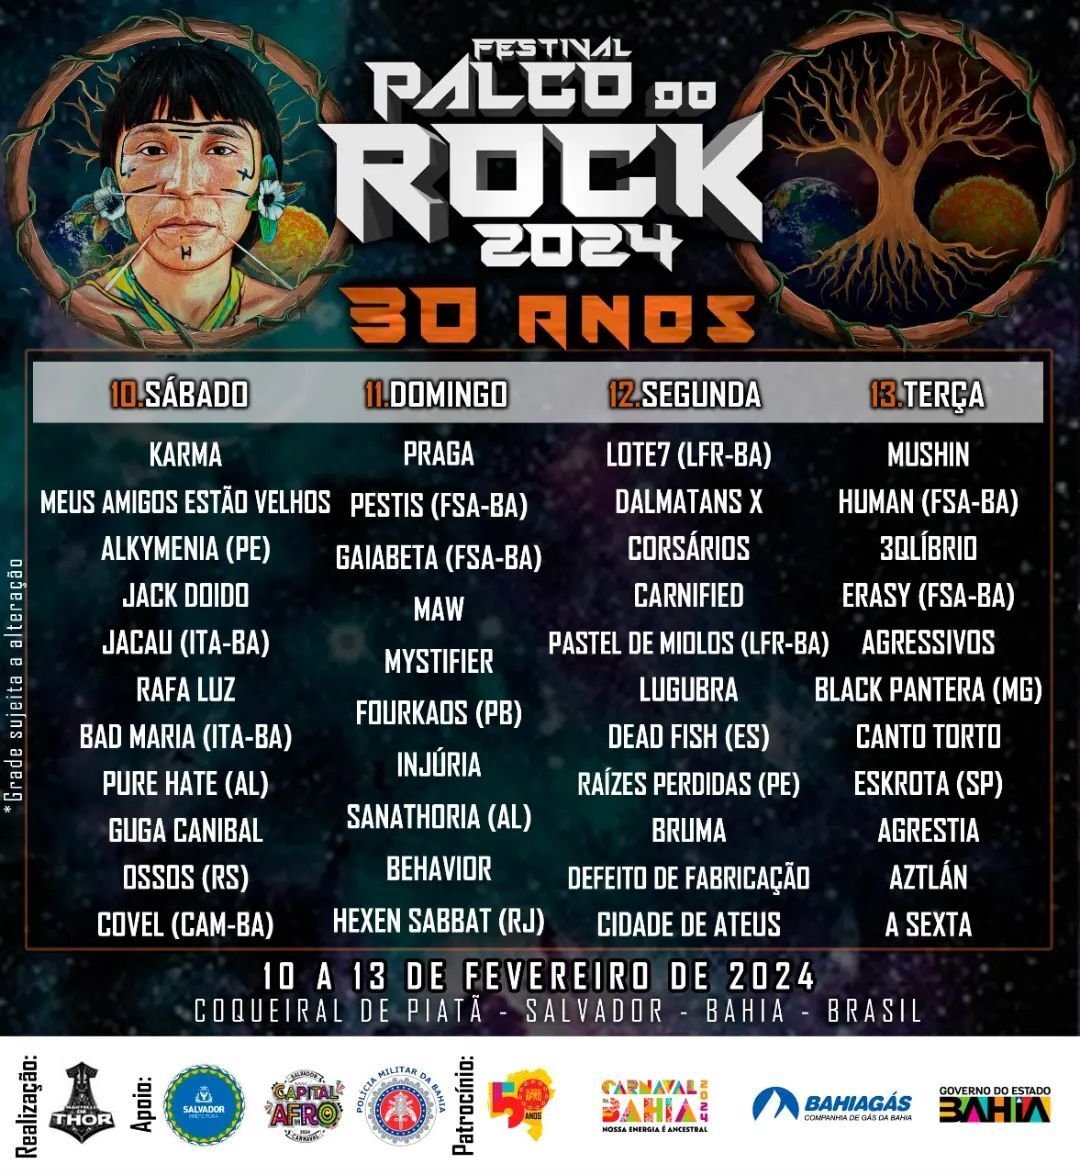 Festival Palco do Rock 2024 acontece durante o carnaval na Bahia com Dead Fish, Black Pantera, Eskröta, Fourkaos e mais 40 bandas